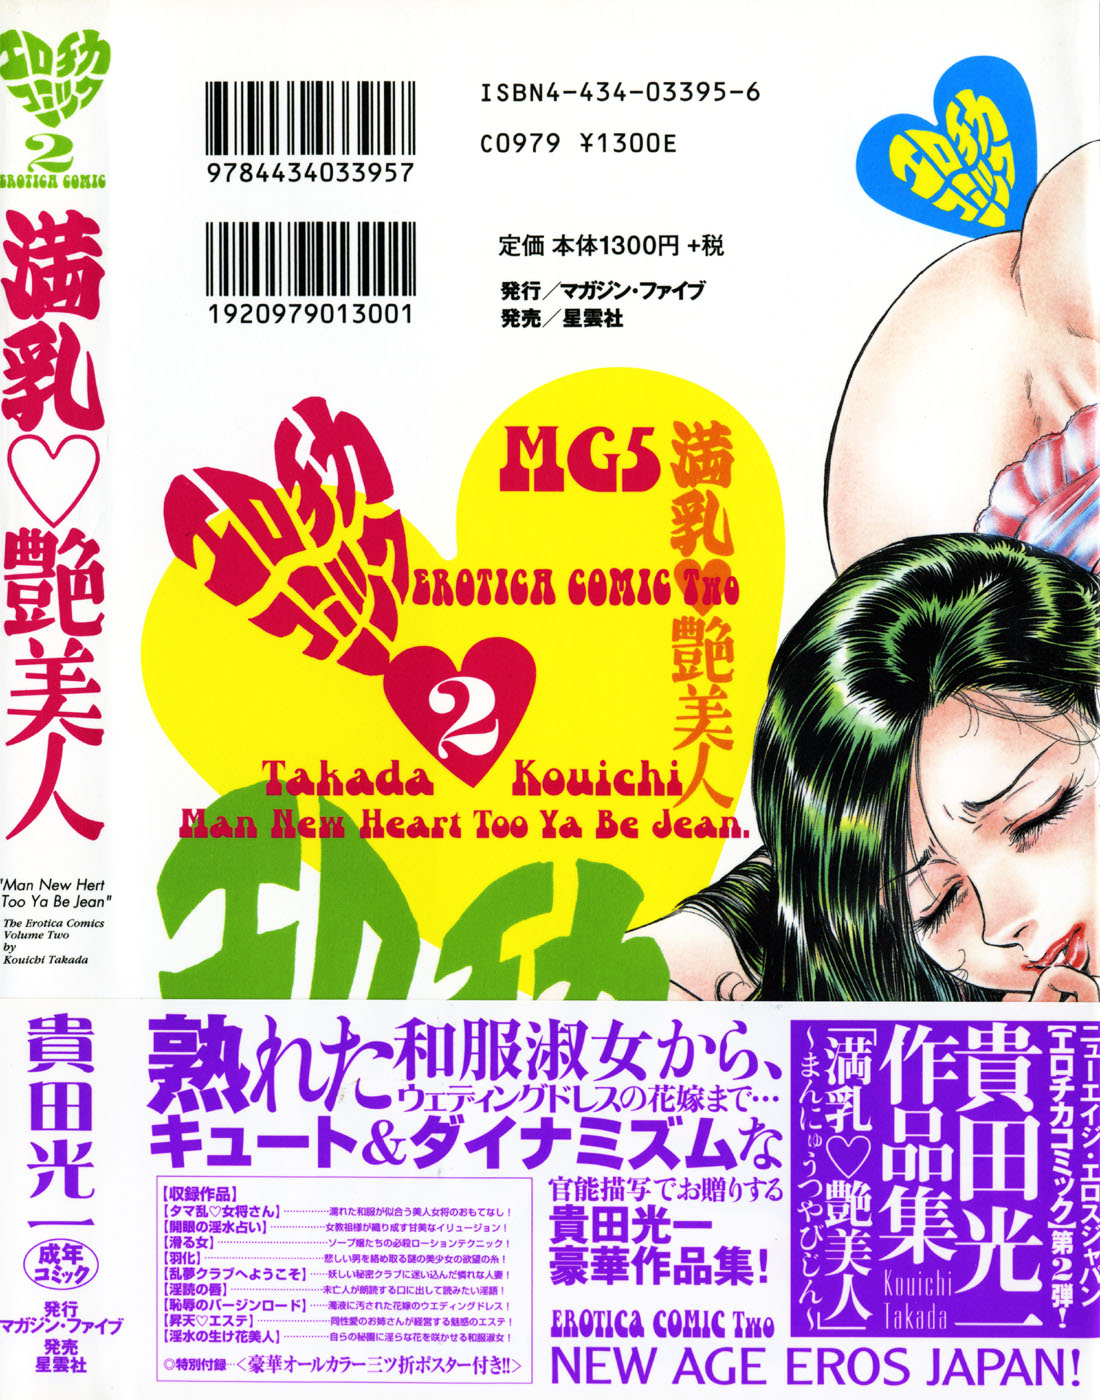 Kouichi Takada - Man New Heart Too Ya Be Jean page 2 full